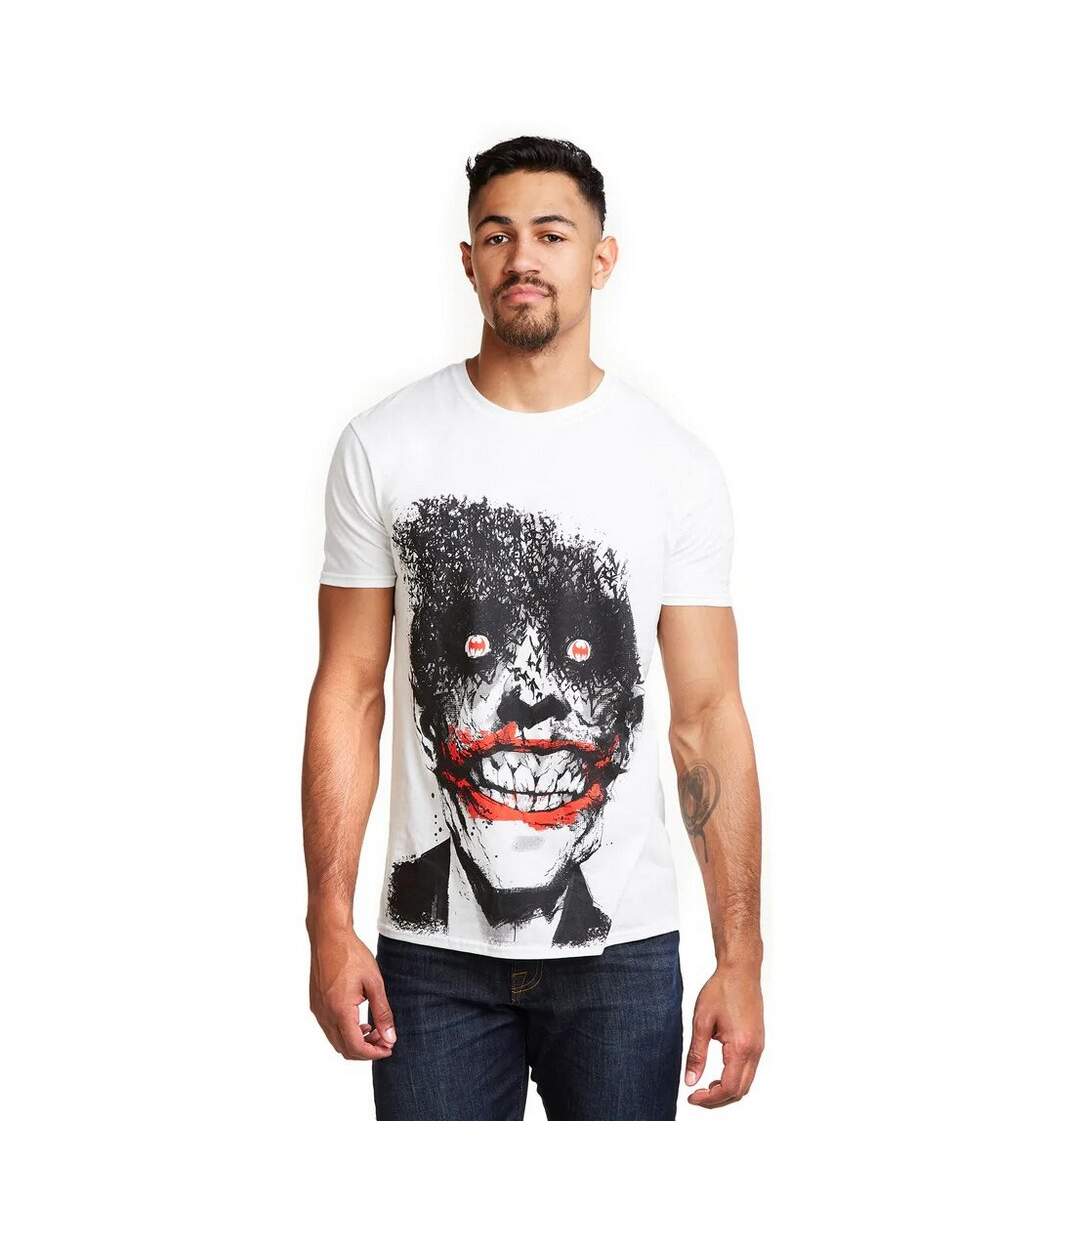 Batman - T-shirt - Homme (Blanc / Noir / Rouge) - UTTV1602